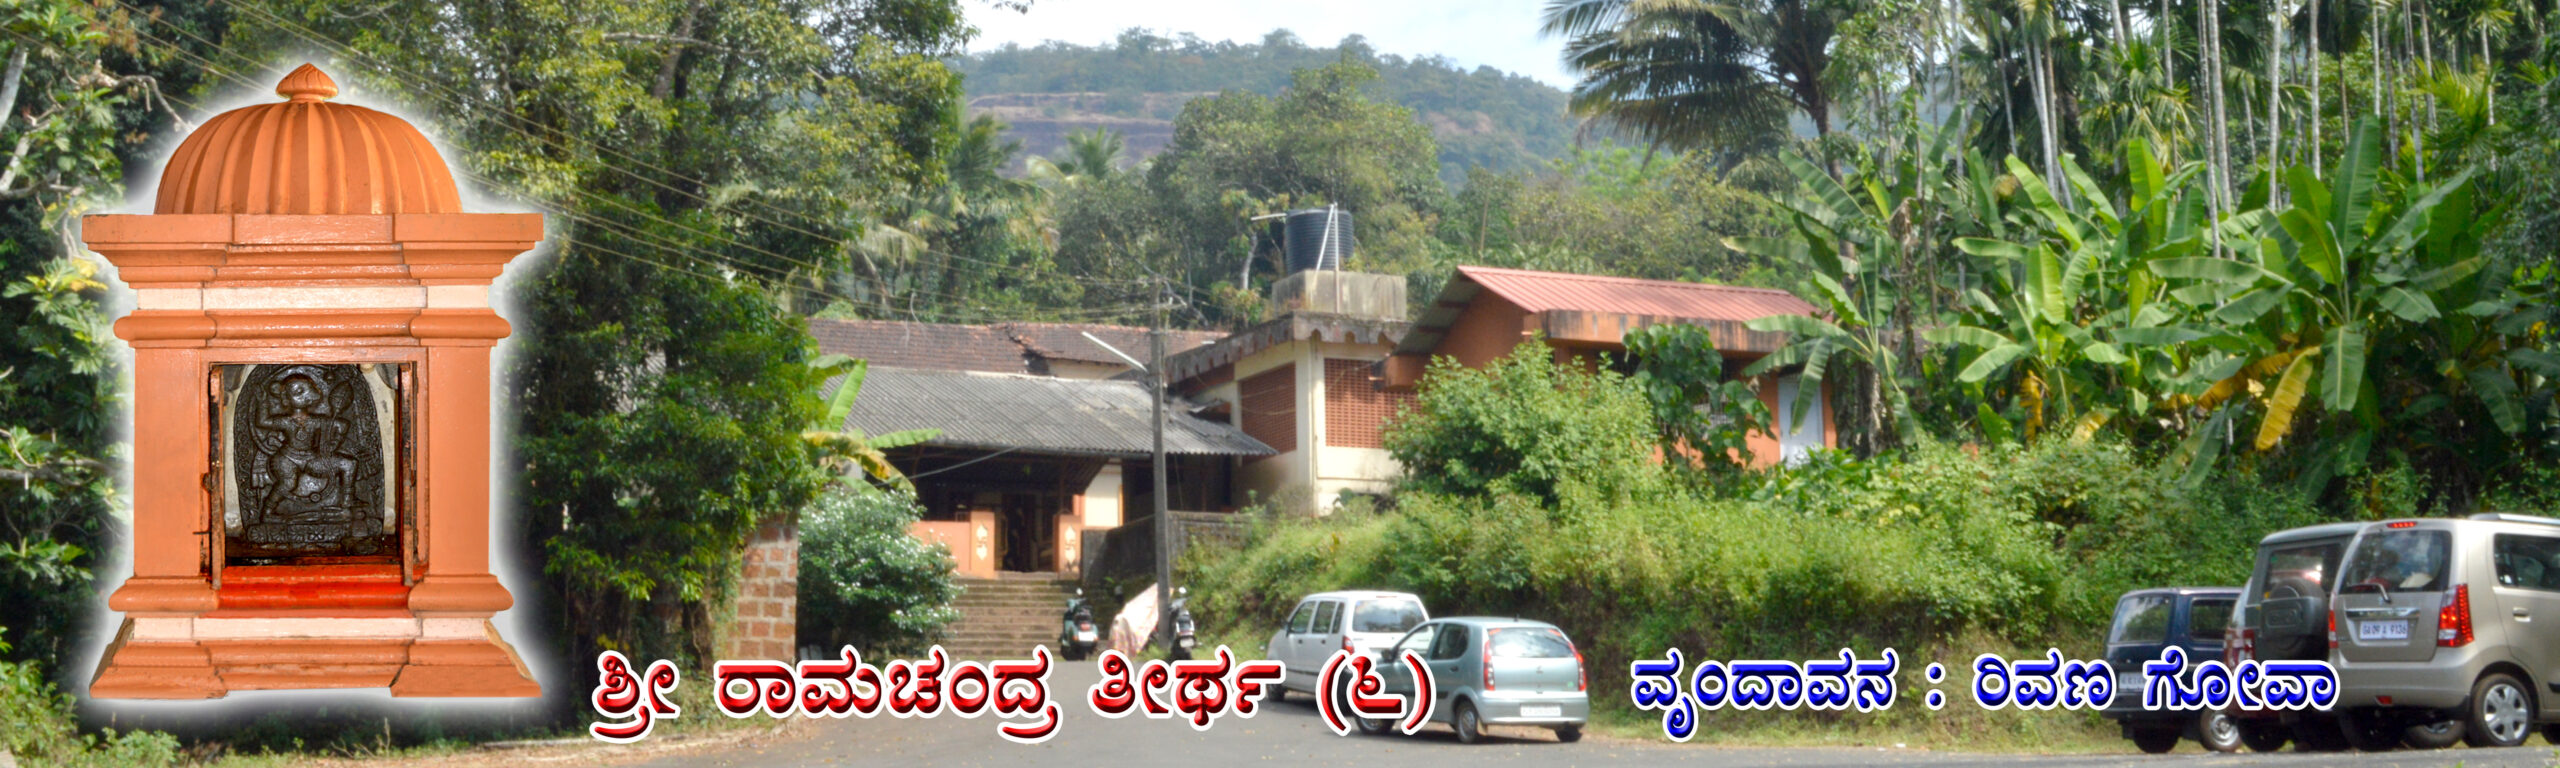 6 Ramachandra Kannada